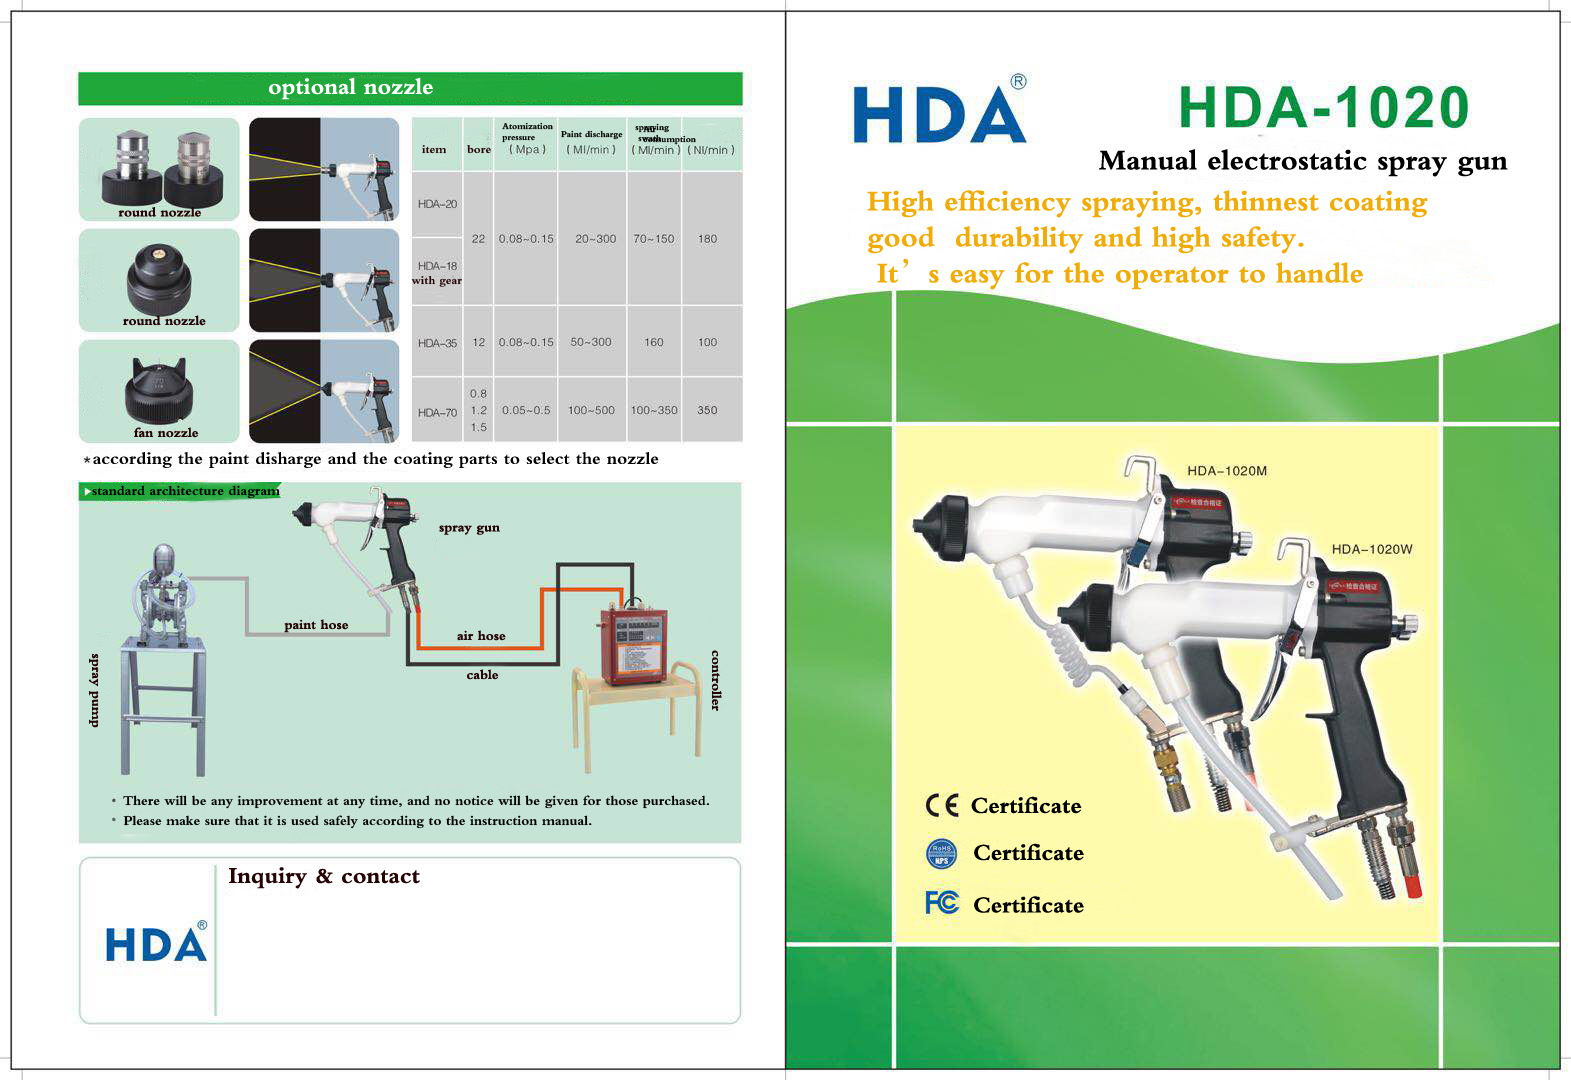 HDA-1020 electrostatic spray gun | www.hdaspraygun.com